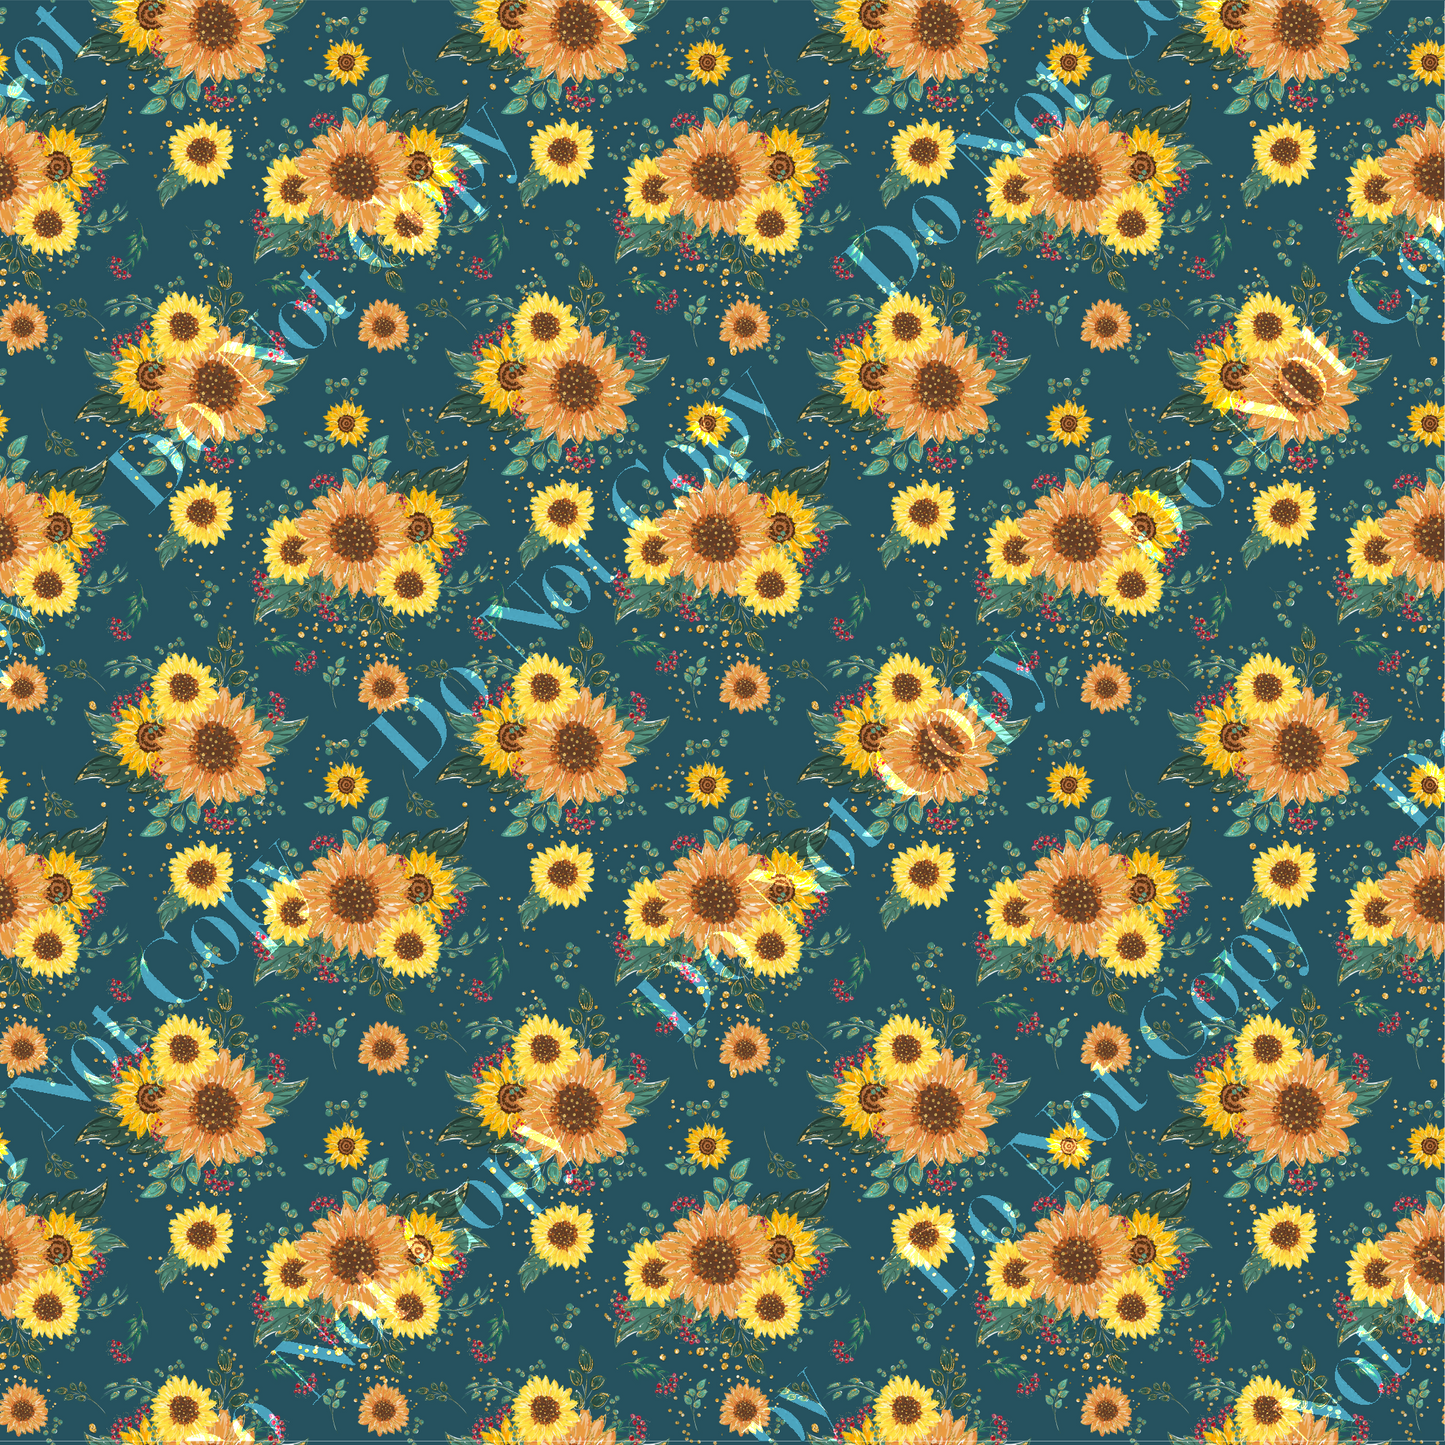 Patterned Vinyl - Blue Sunflowers